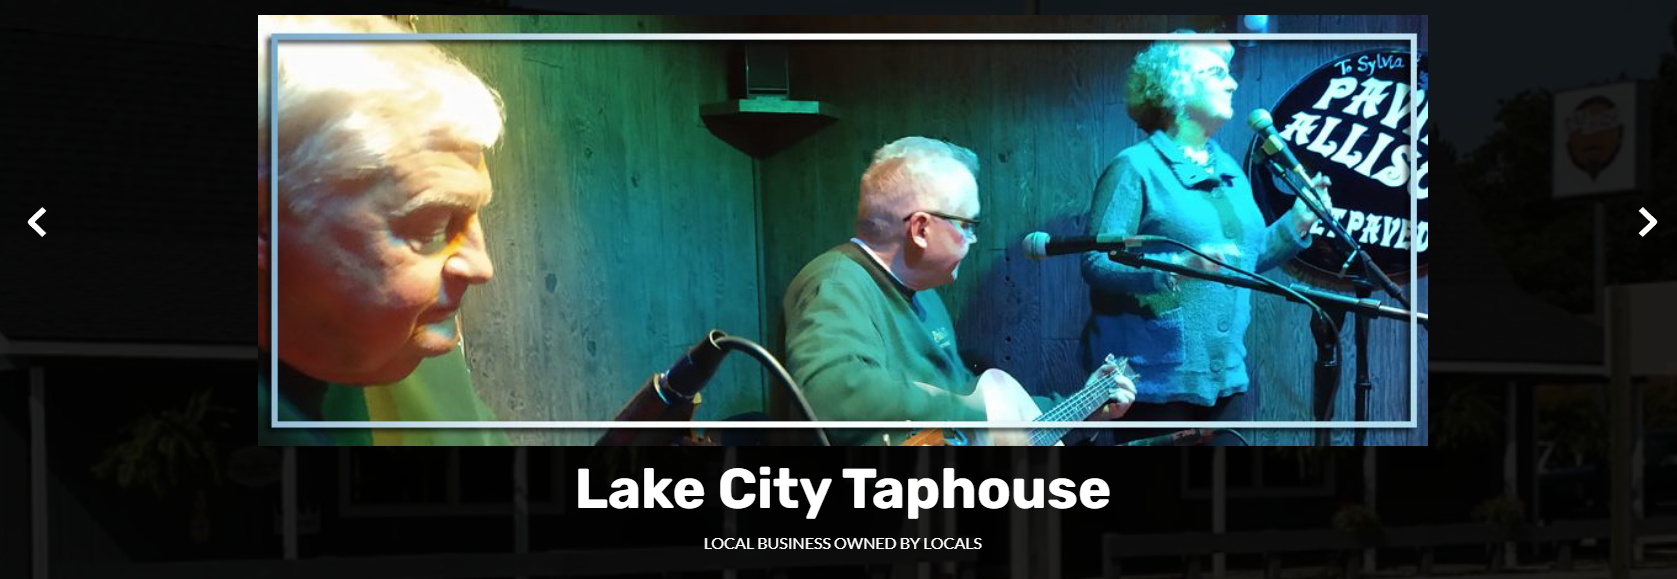 Lake City Taphouse